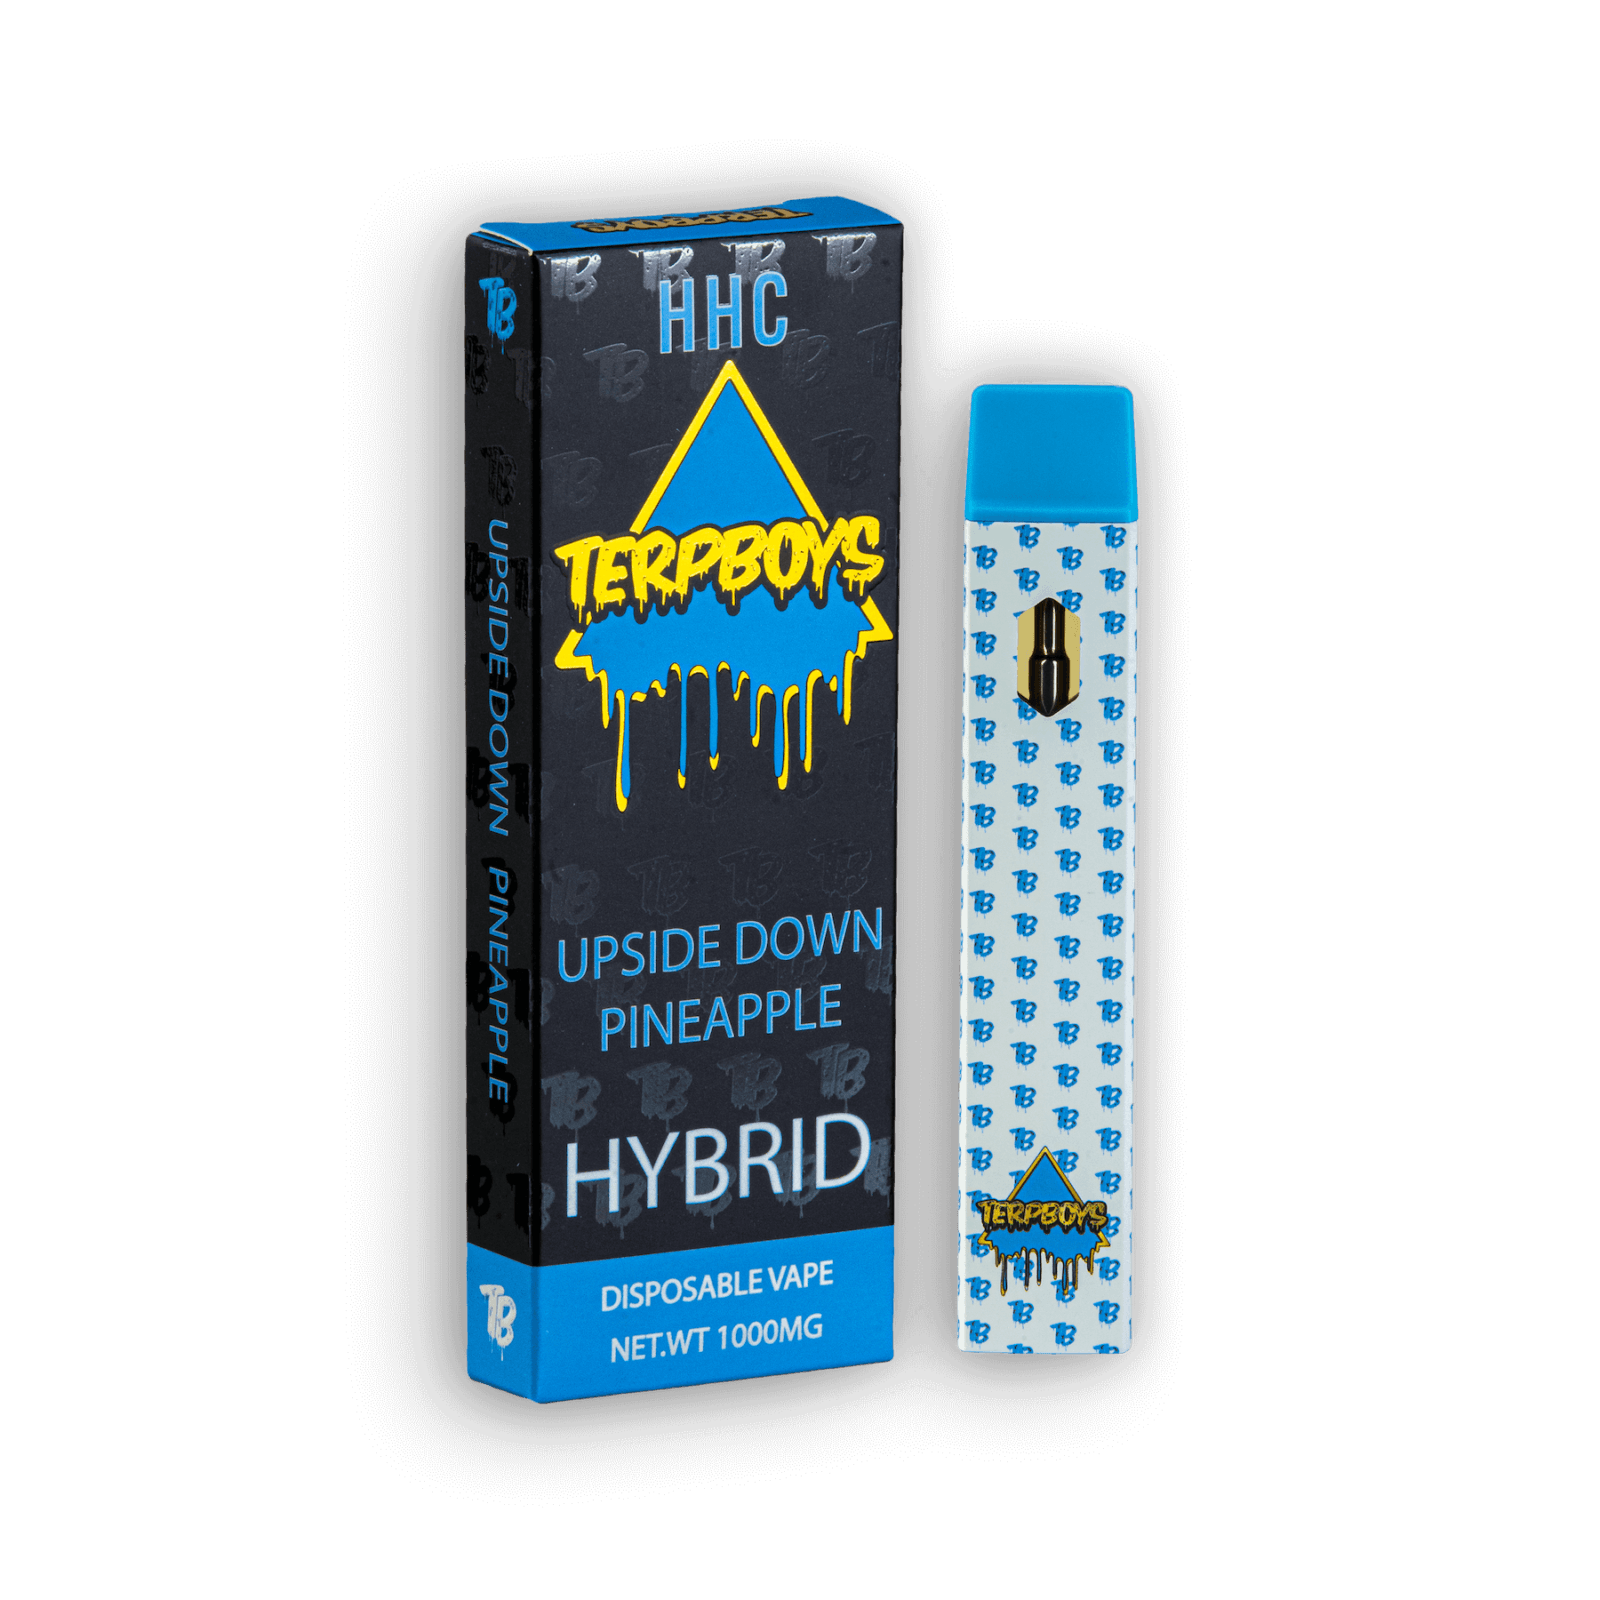 TerpBoys Hybrid HHC Disposable Vapes 1000mg Best Price